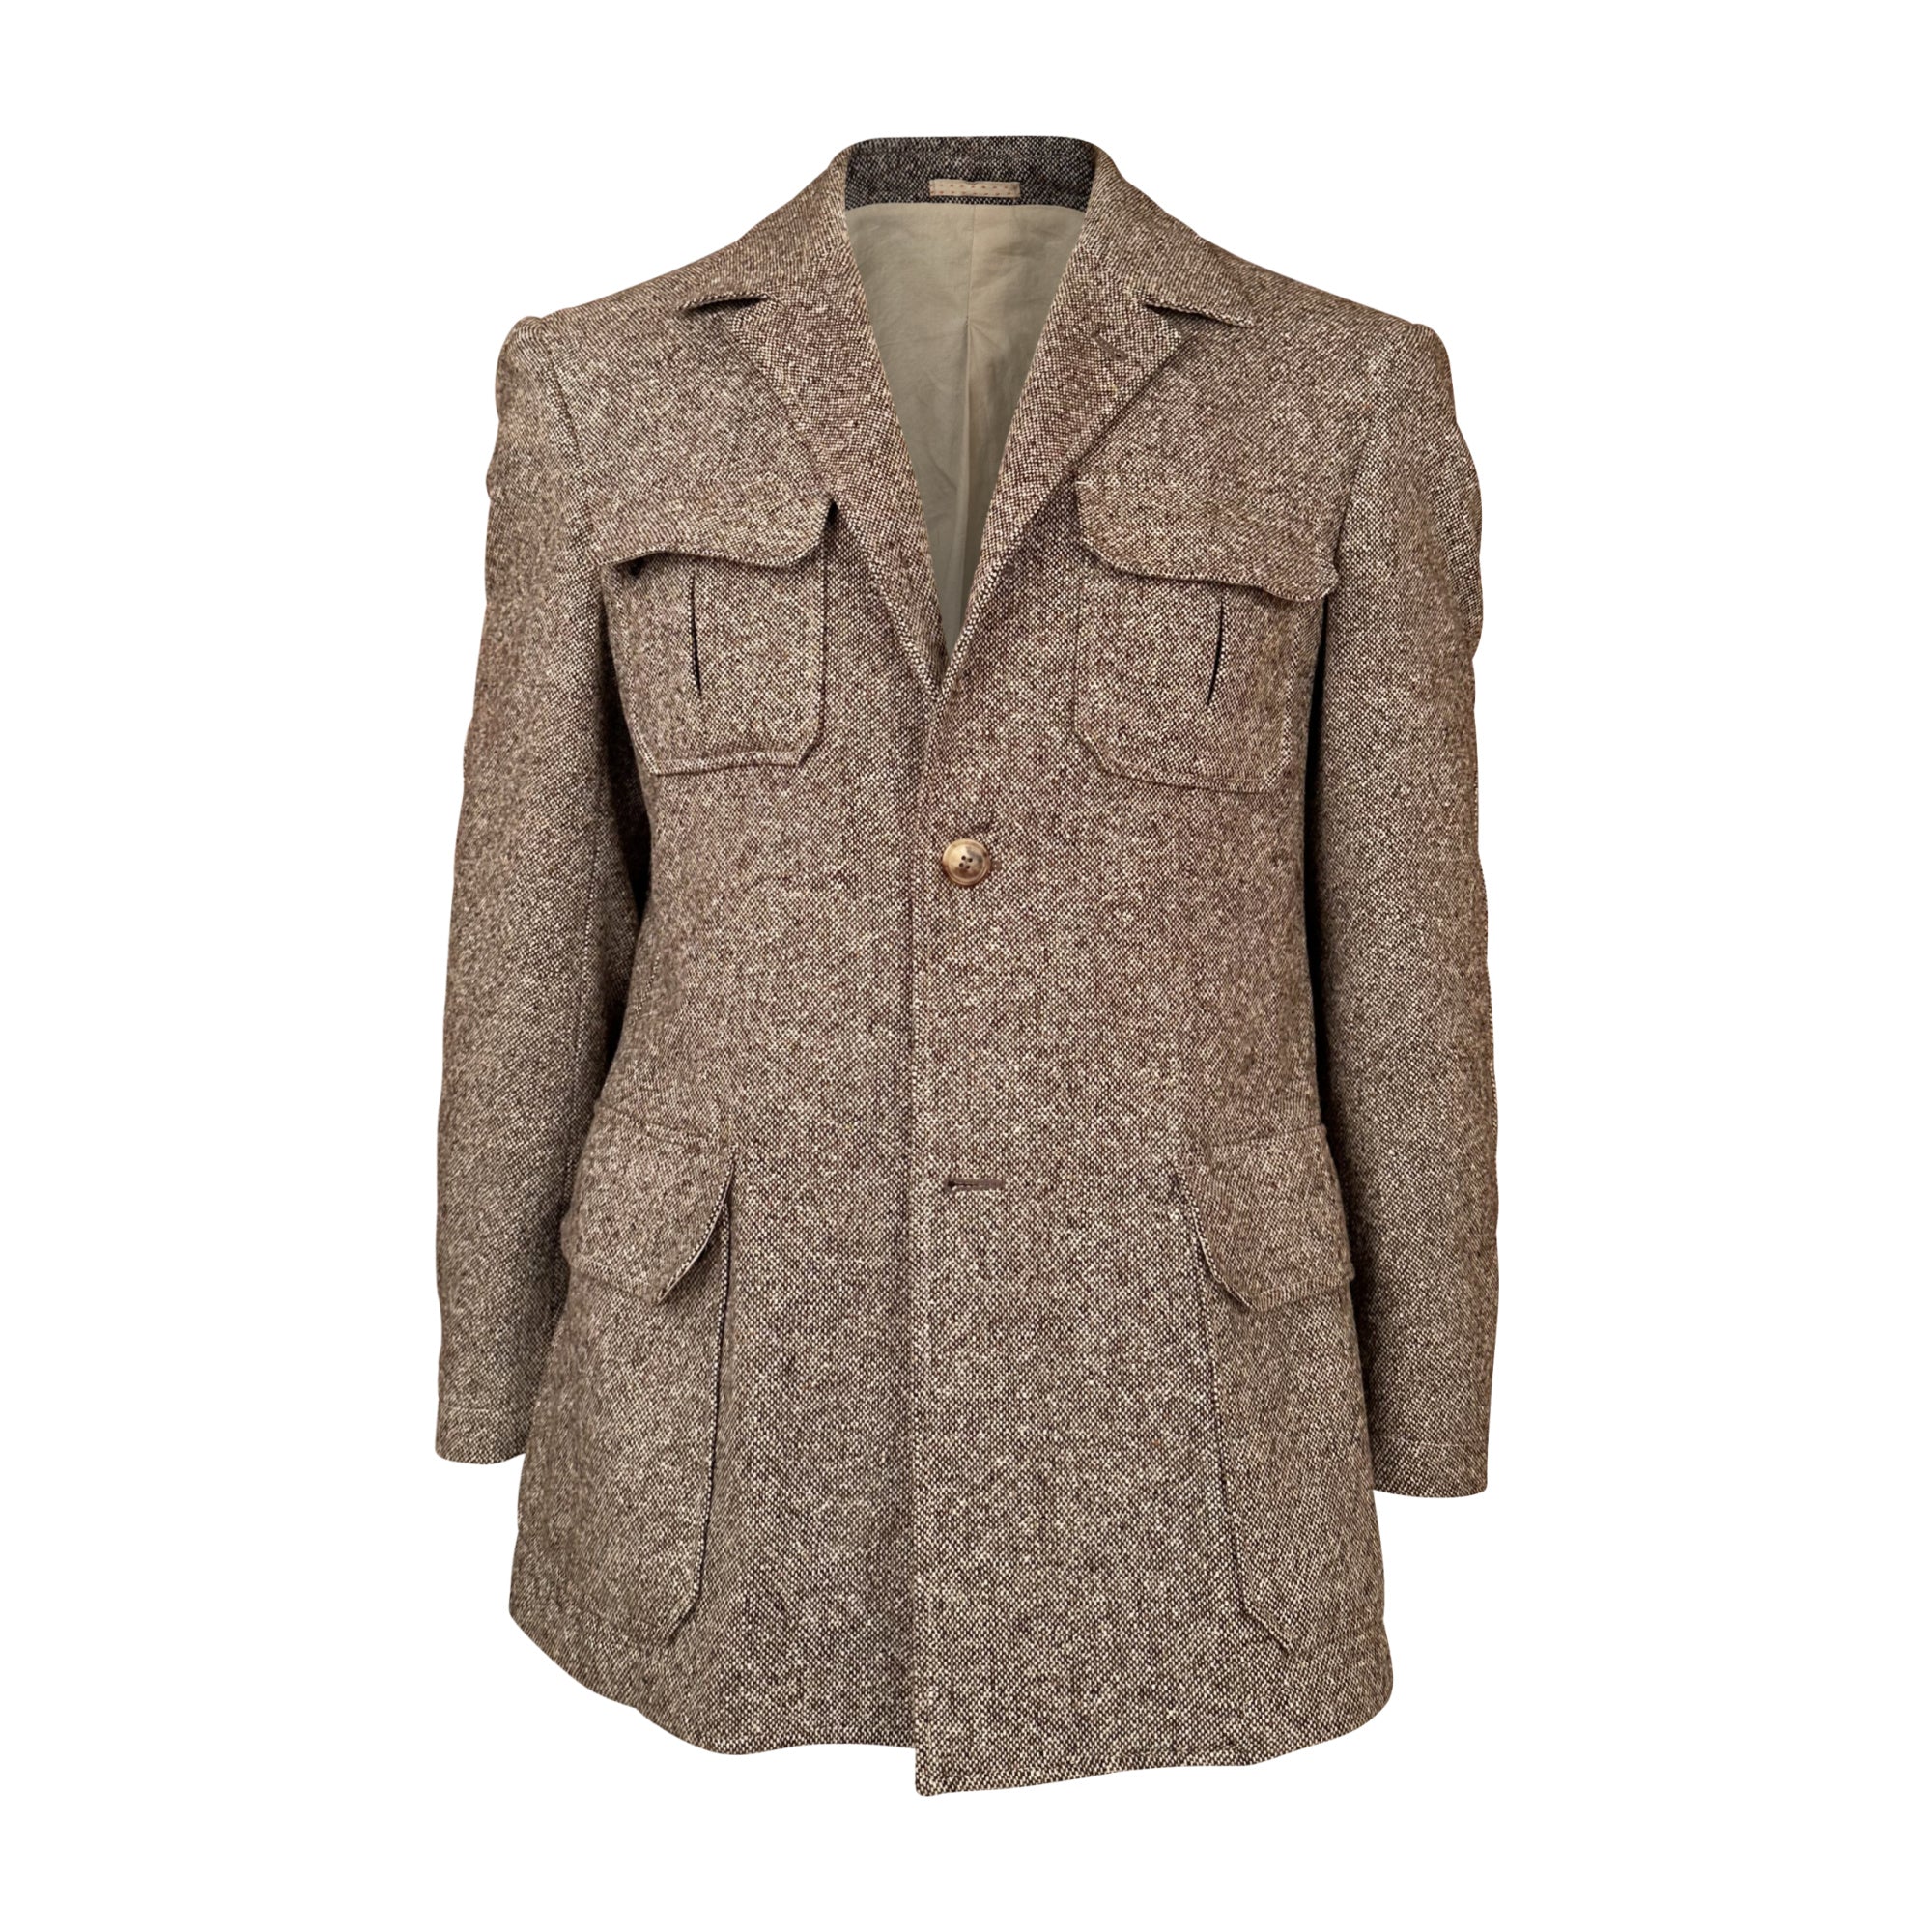 Brunello Cucinelli Field Jacket - 24/7 Clothing